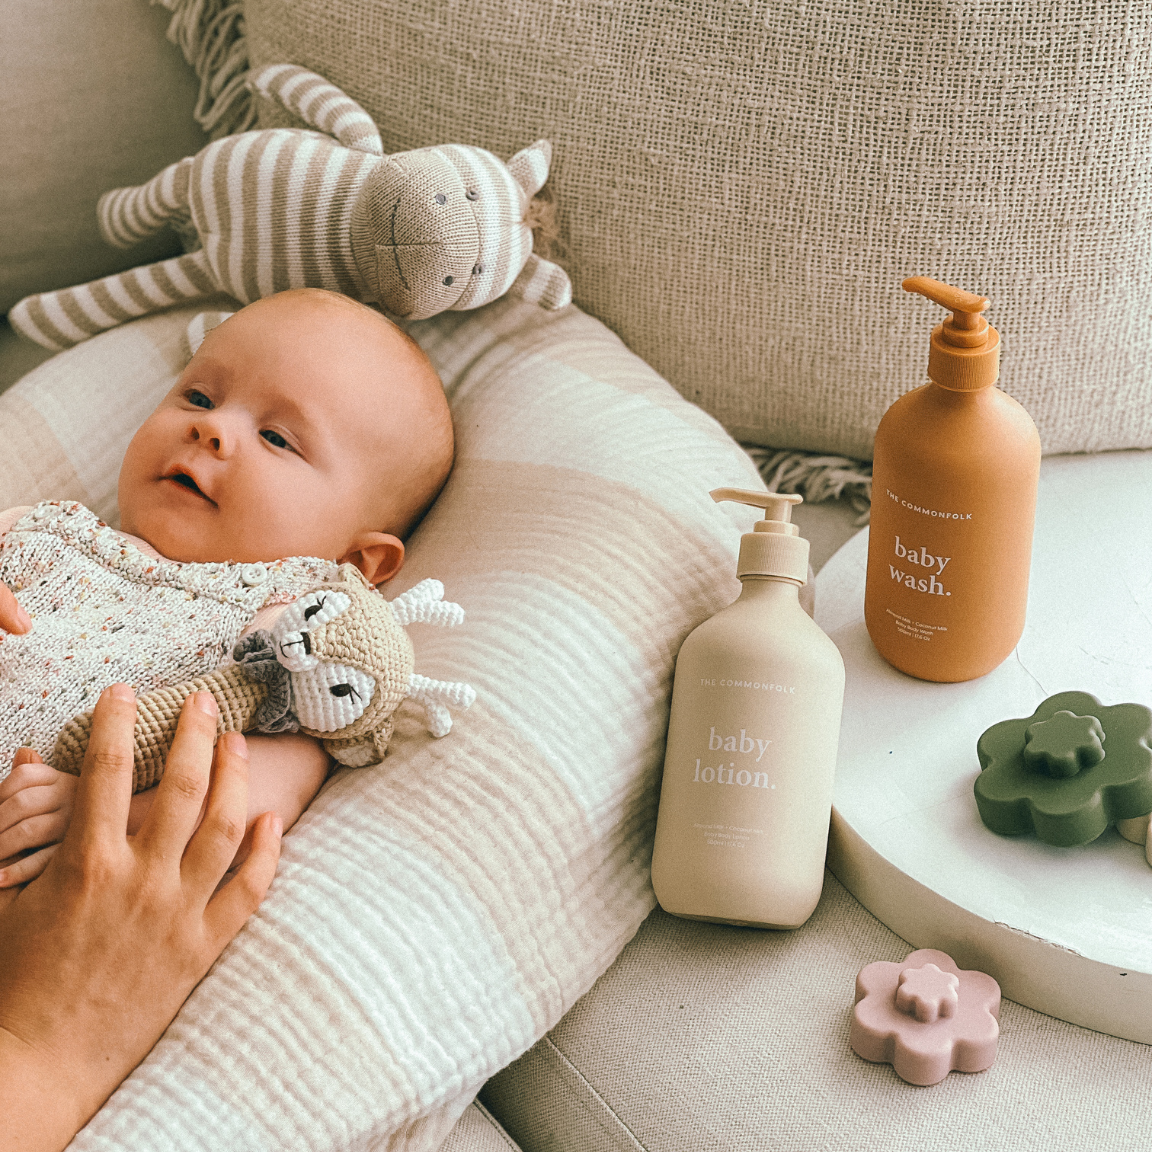 BABY Hand + Body Wash - Keep It Simple / Nude